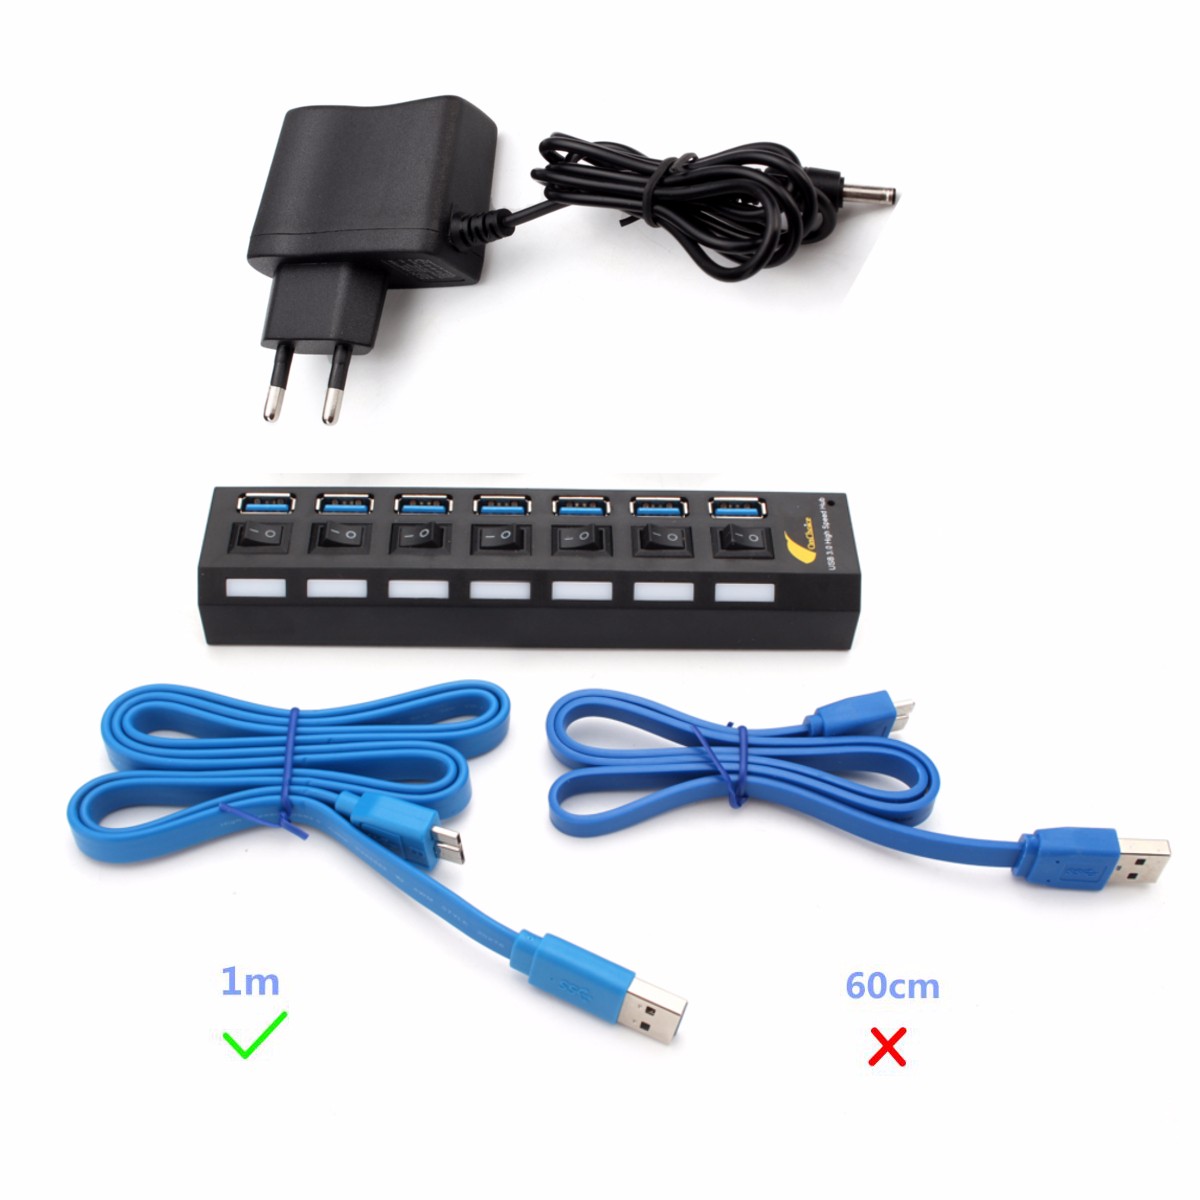 ONCHOICE 7Port USB 3.0 Hub On/Off Switch EU US UK AC Power Adapter For Laptop Desktop 41